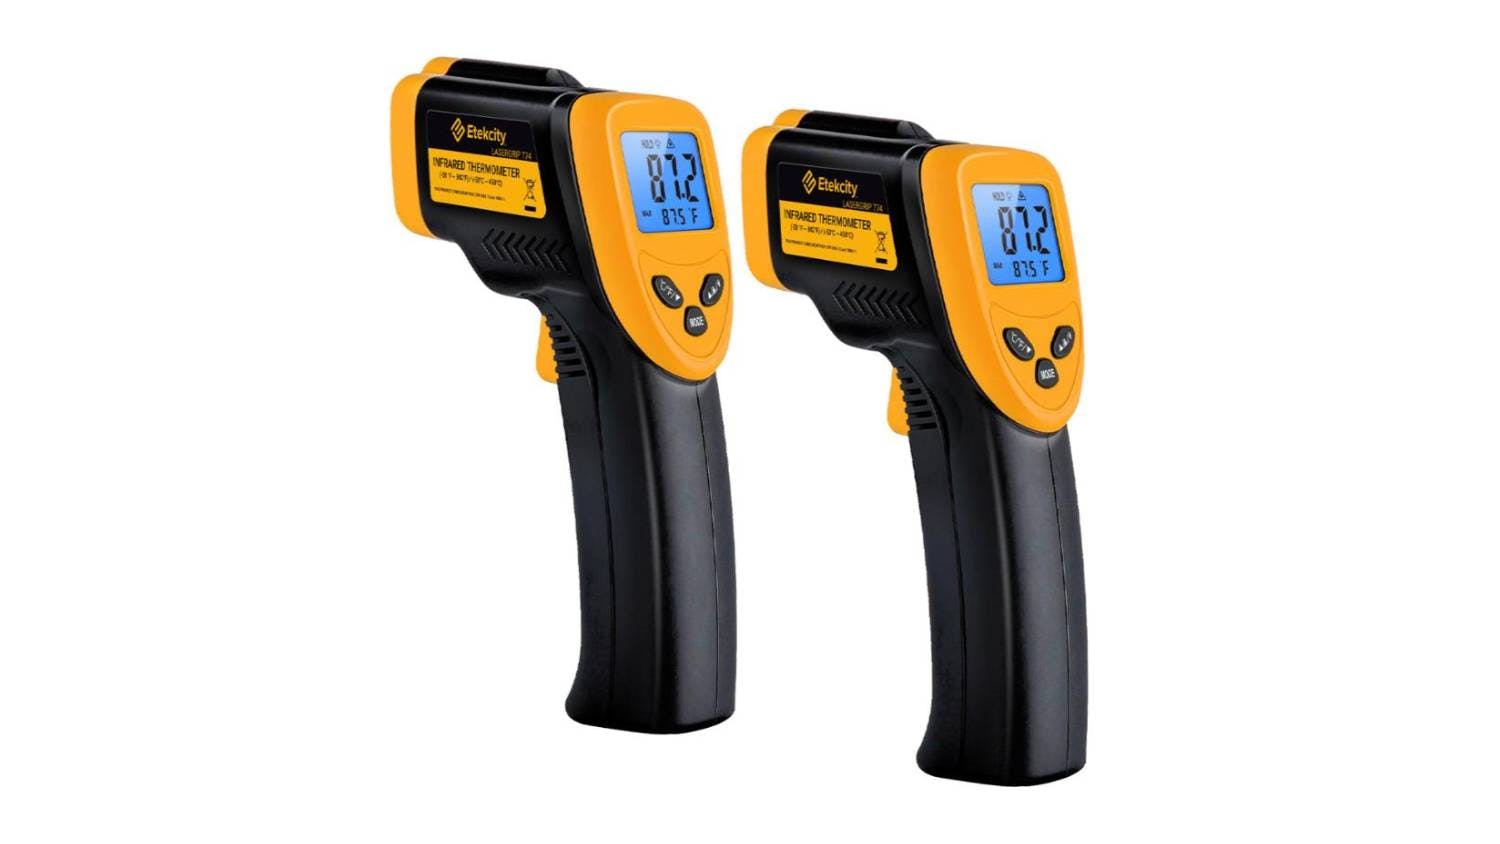 ETEKCITY Lasergrip 774 Infrared Thermometer User Manual